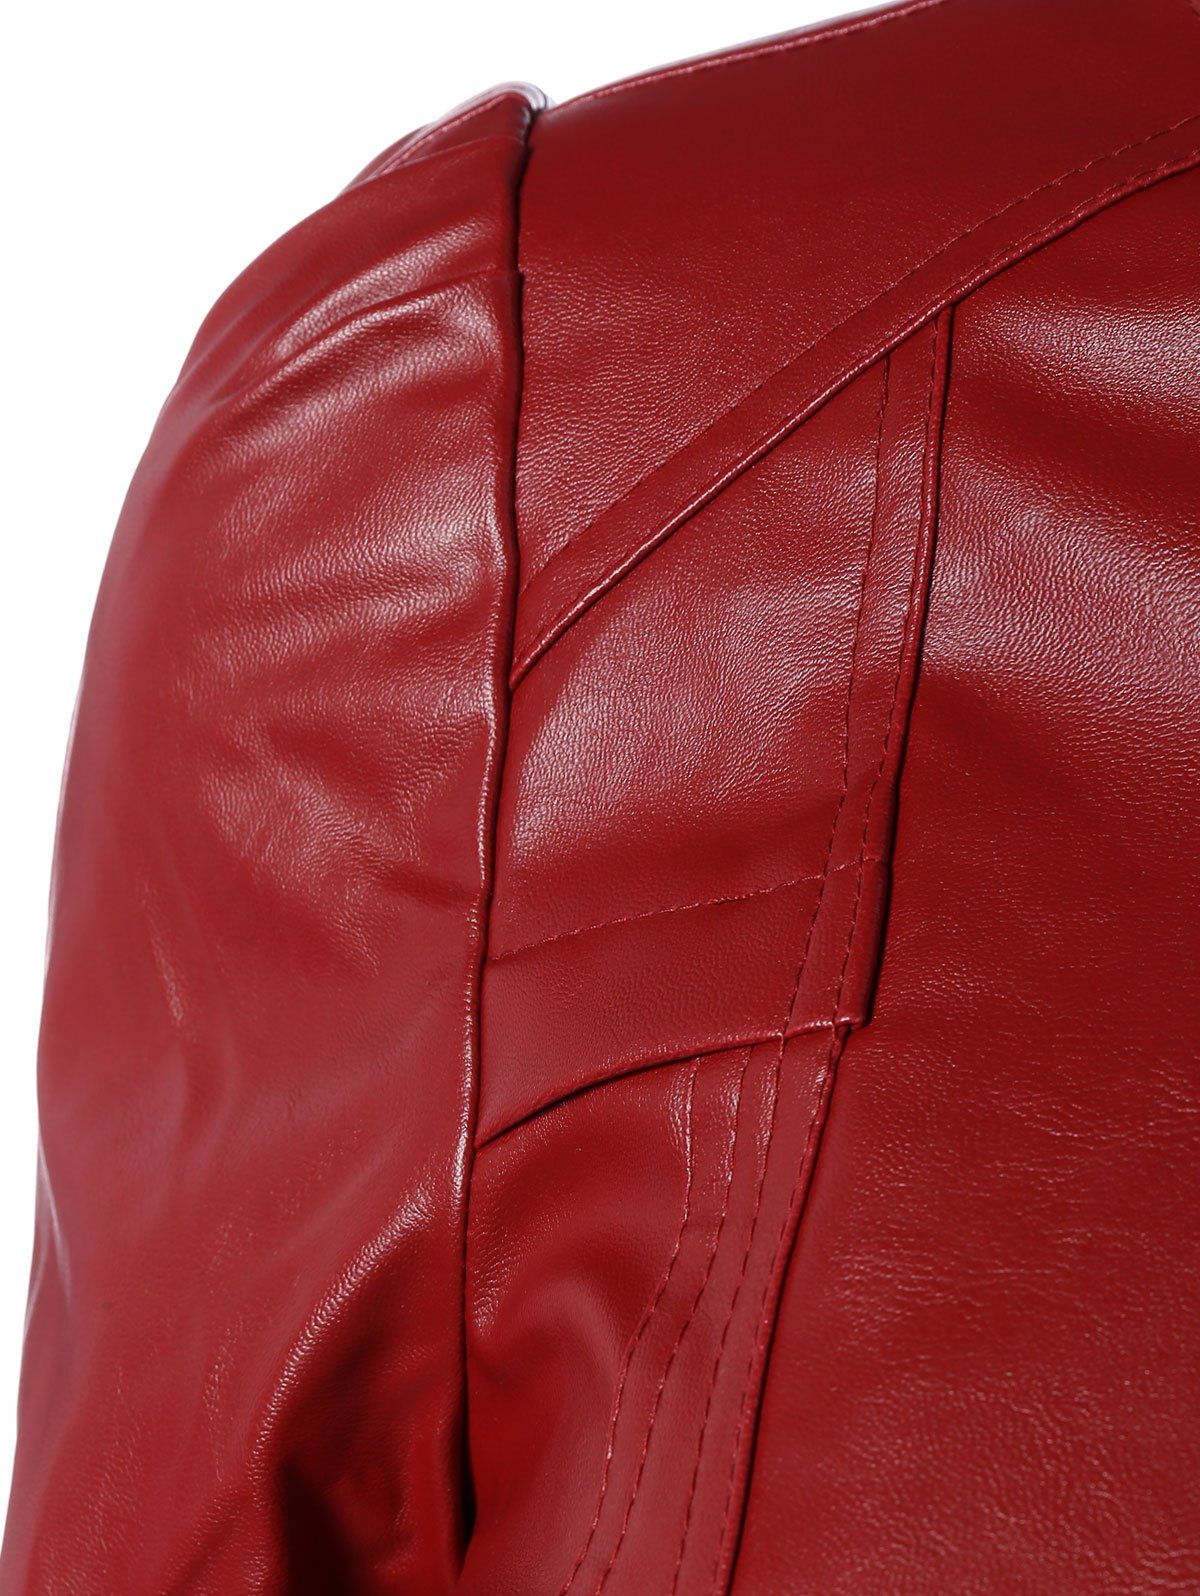 Zip PU Leather Biker Jacket, WINE RED, M in Jackets & Coats | DressLily.com